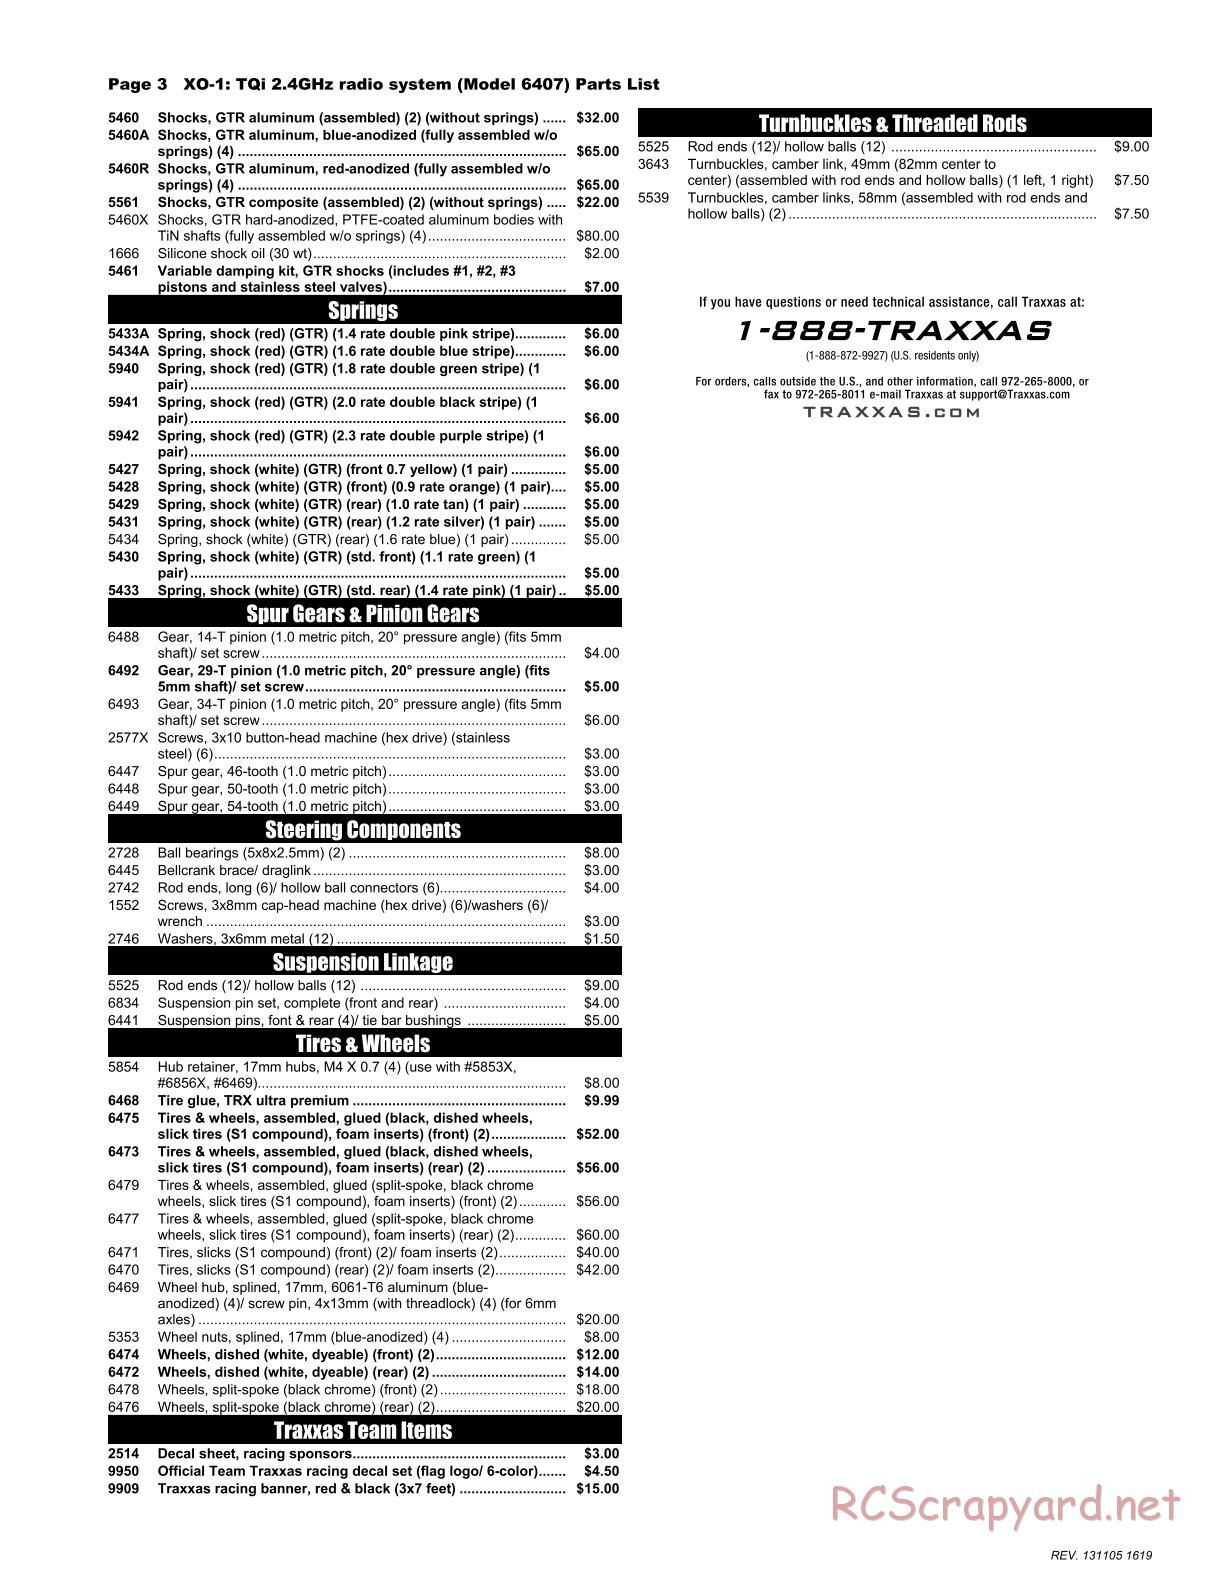 Traxxas - XO-1 (2011) - Parts List - Page 3